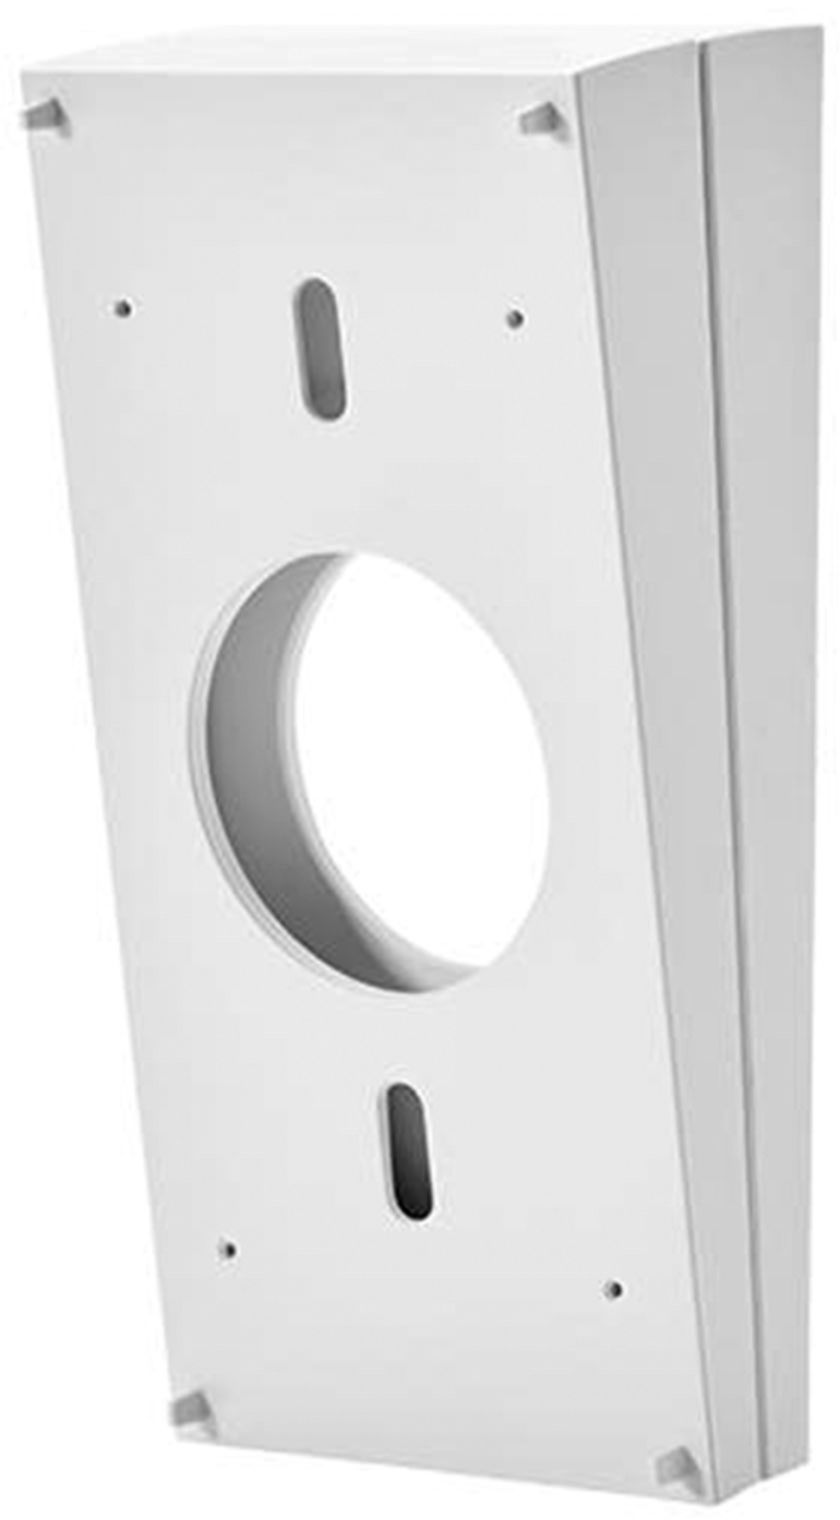 Ring Video Doorbell Wedge Kit White 